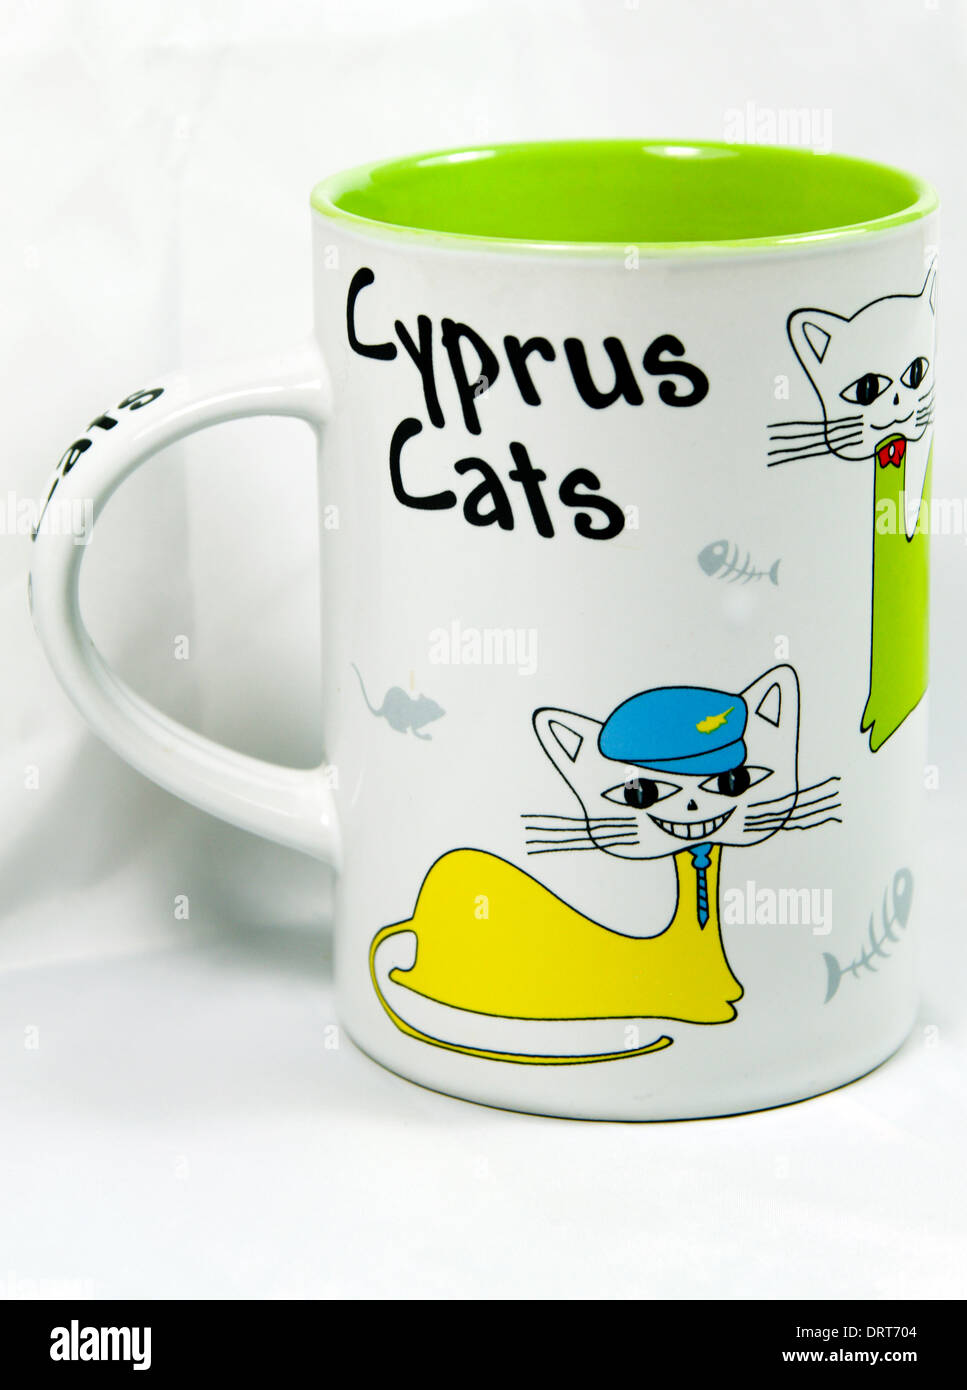 Cyprus Cats Mug. Stock Photo